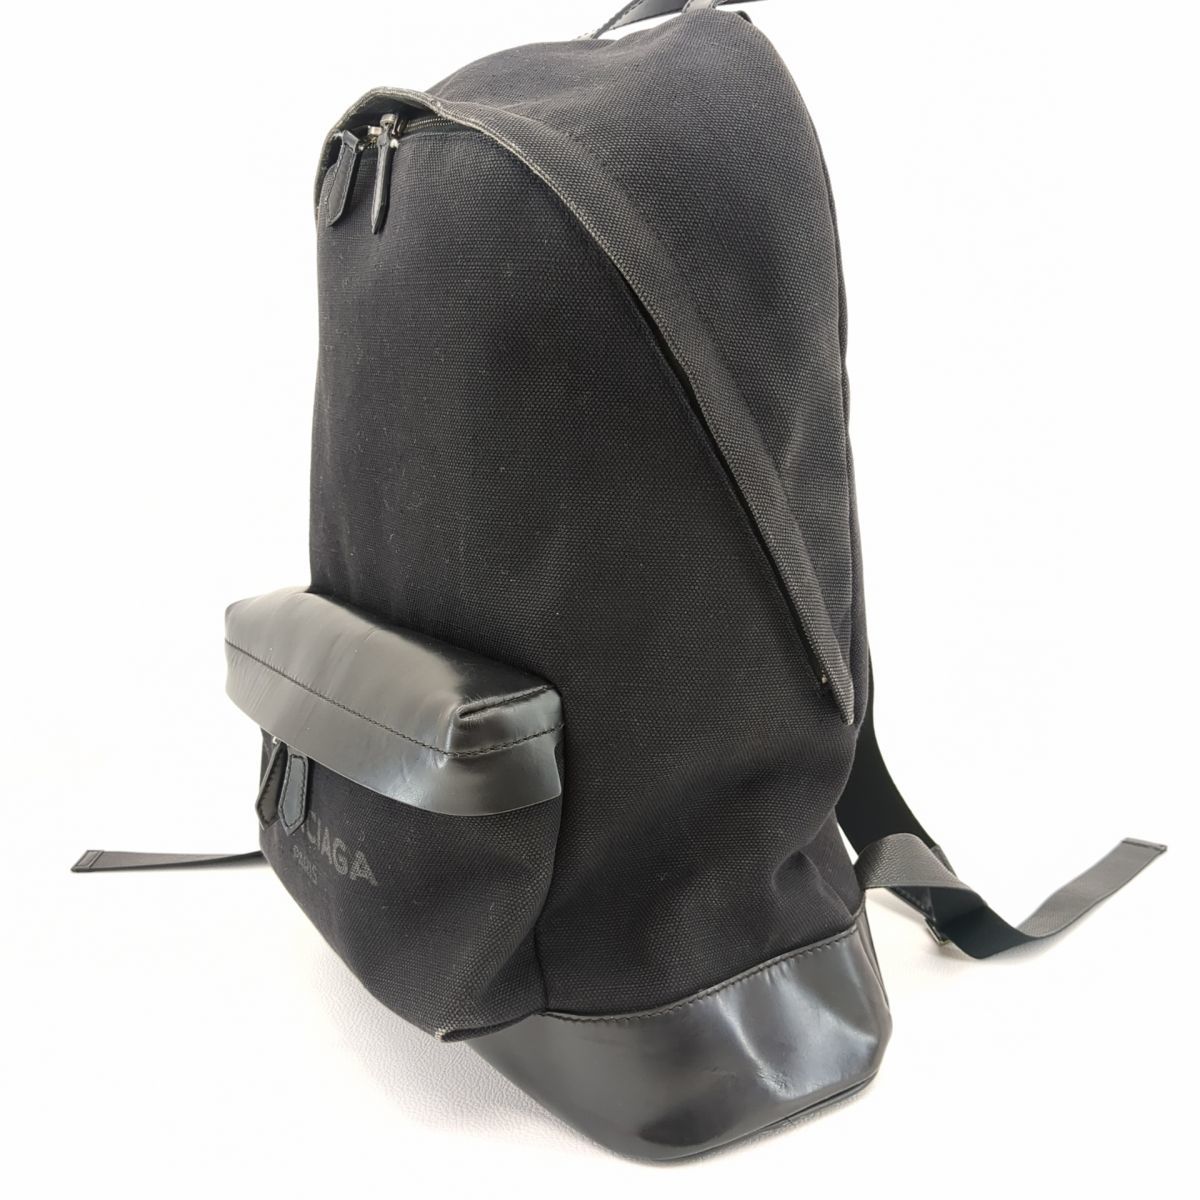  Balenciaga рюкзак черный 392007 рюкзак парусина BALENCIAGA б/у *3111/ Fujieda Inter магазин 